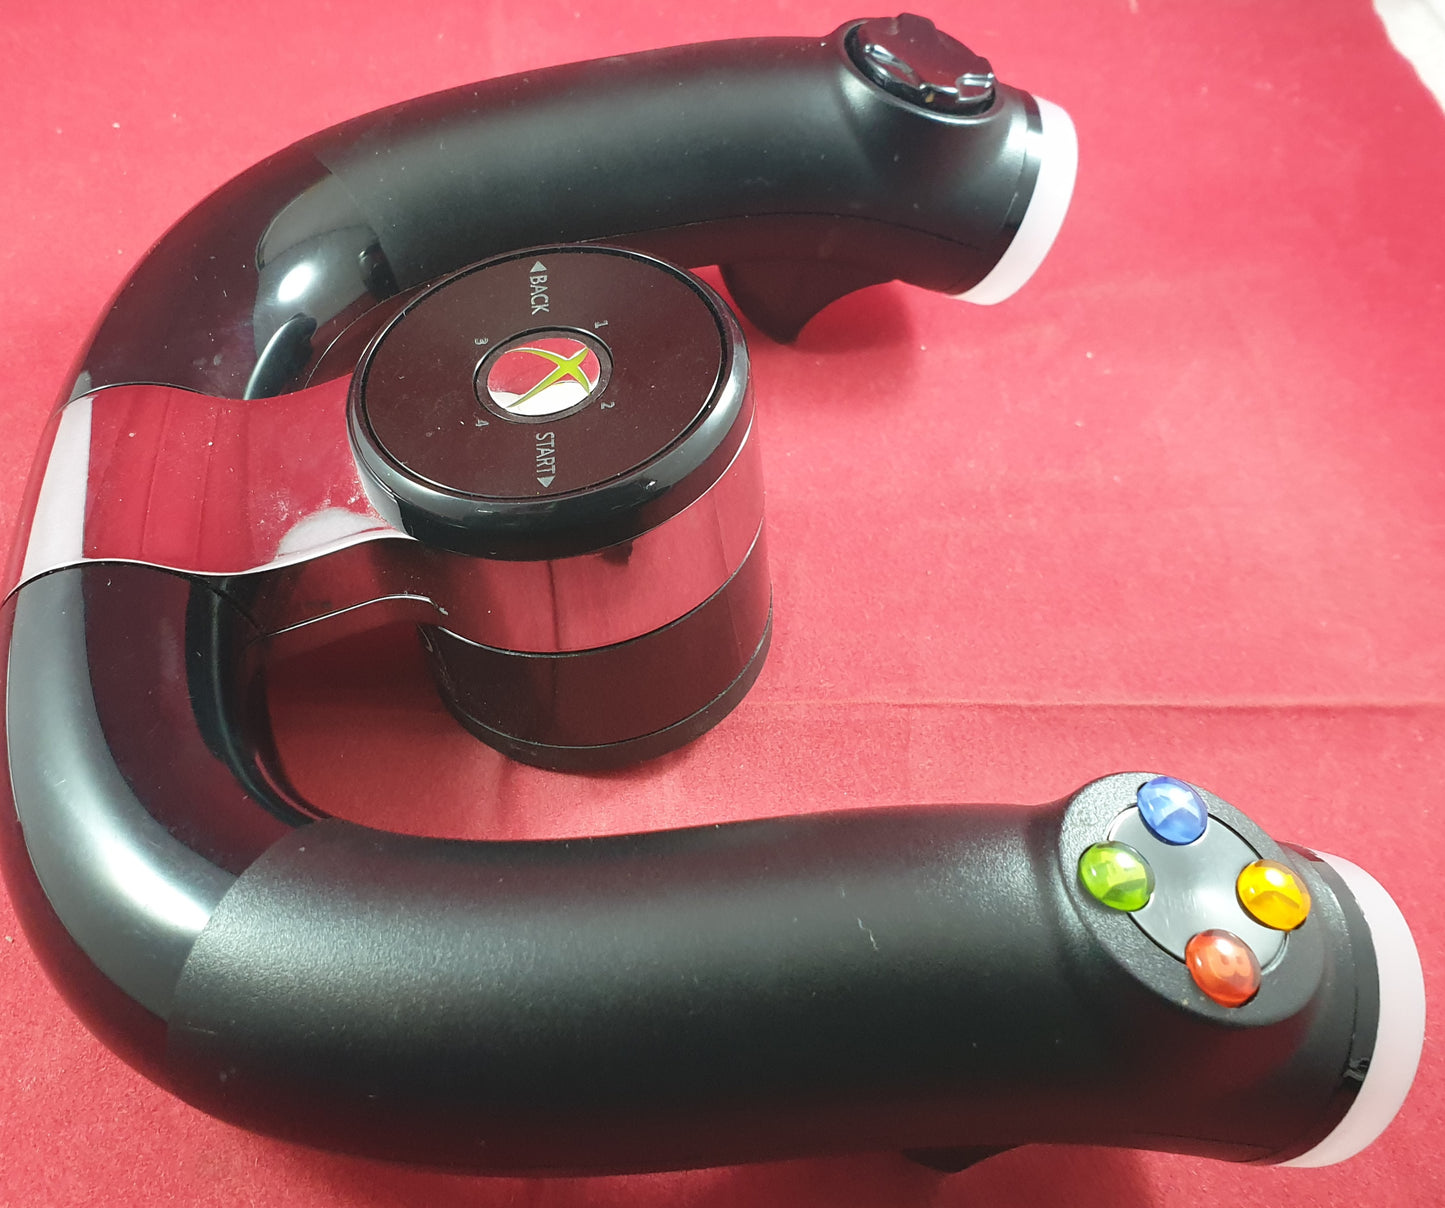 Wireless Speed Wheel & F1 Race Stars Microsoft Xbox 360 Game & Accessory